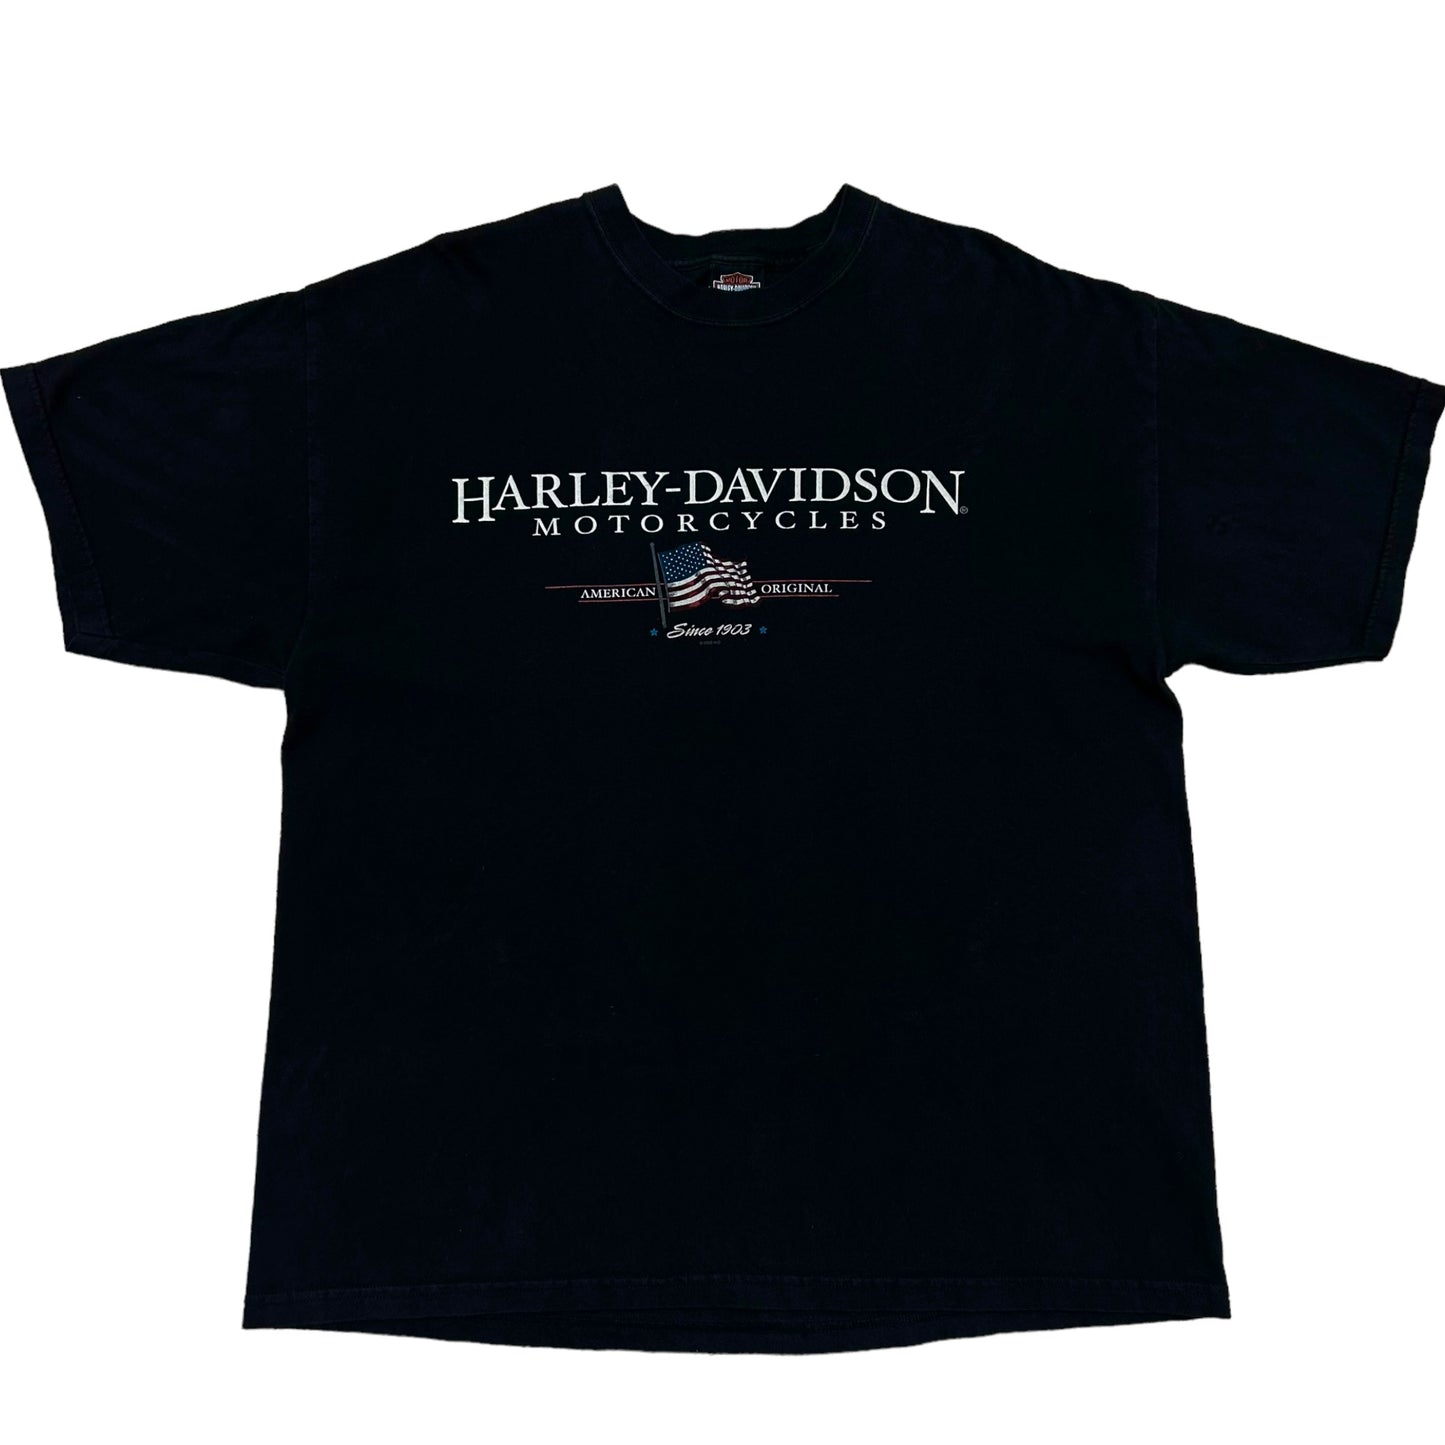 Vintage Y2K Big Sky Harley Davidson Great Falls, Montana Black Graphic T-Shirt - Size XL